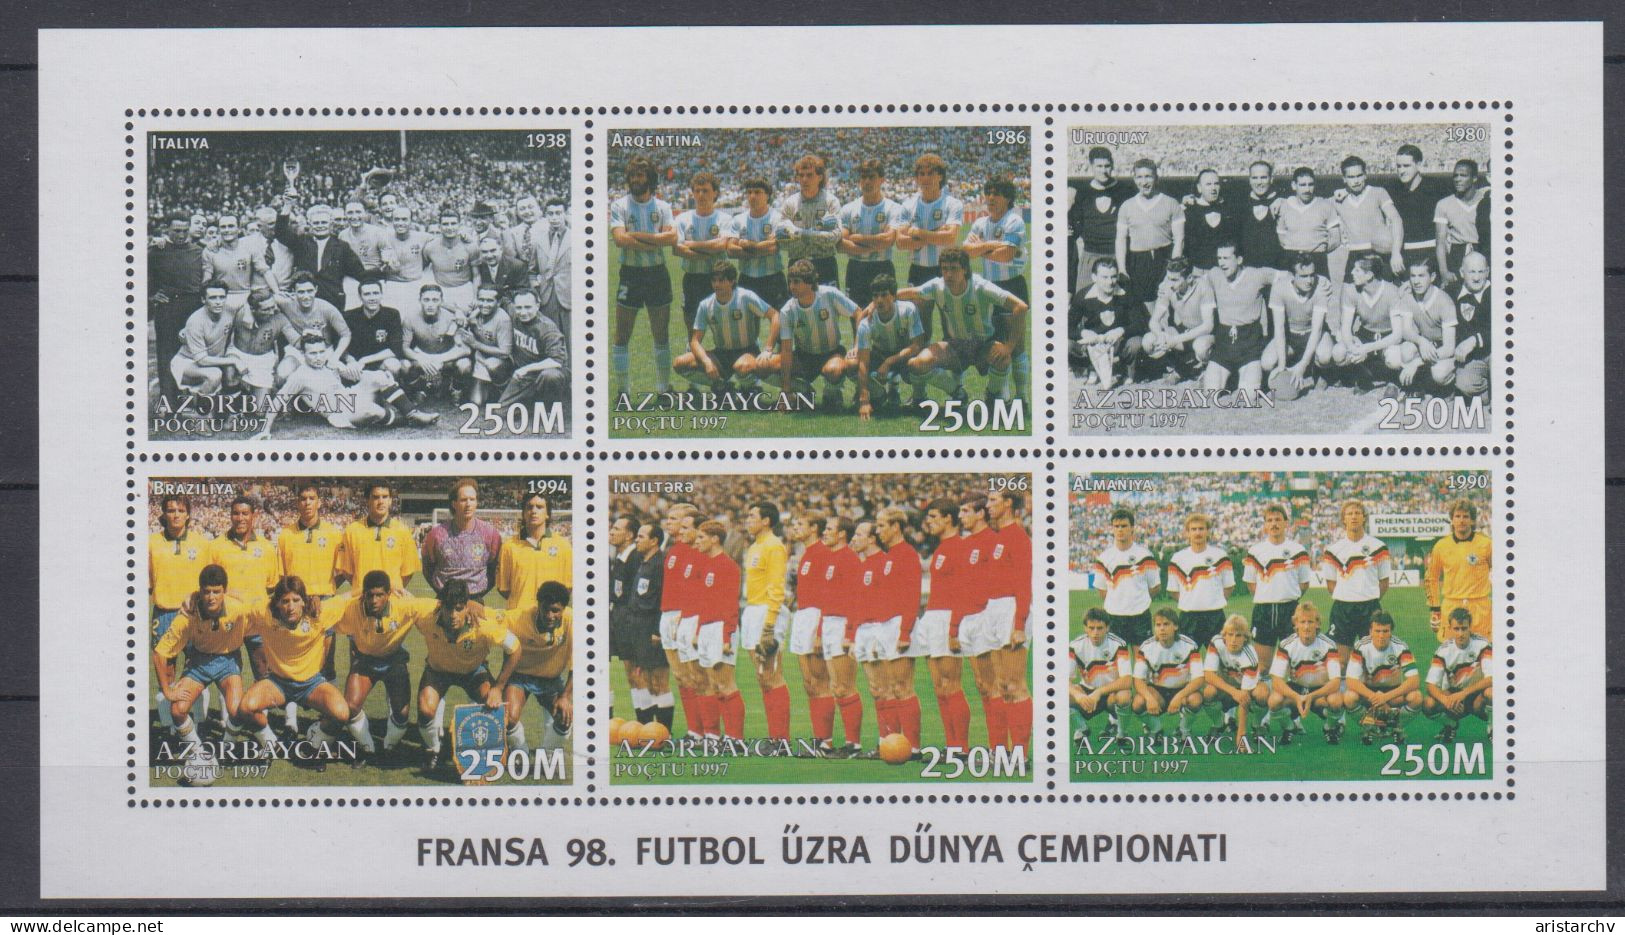 AZERBAIJAN 1998 FOOTBALL WORLD CUP SHEETLET AND S/SHEET - 1998 – France